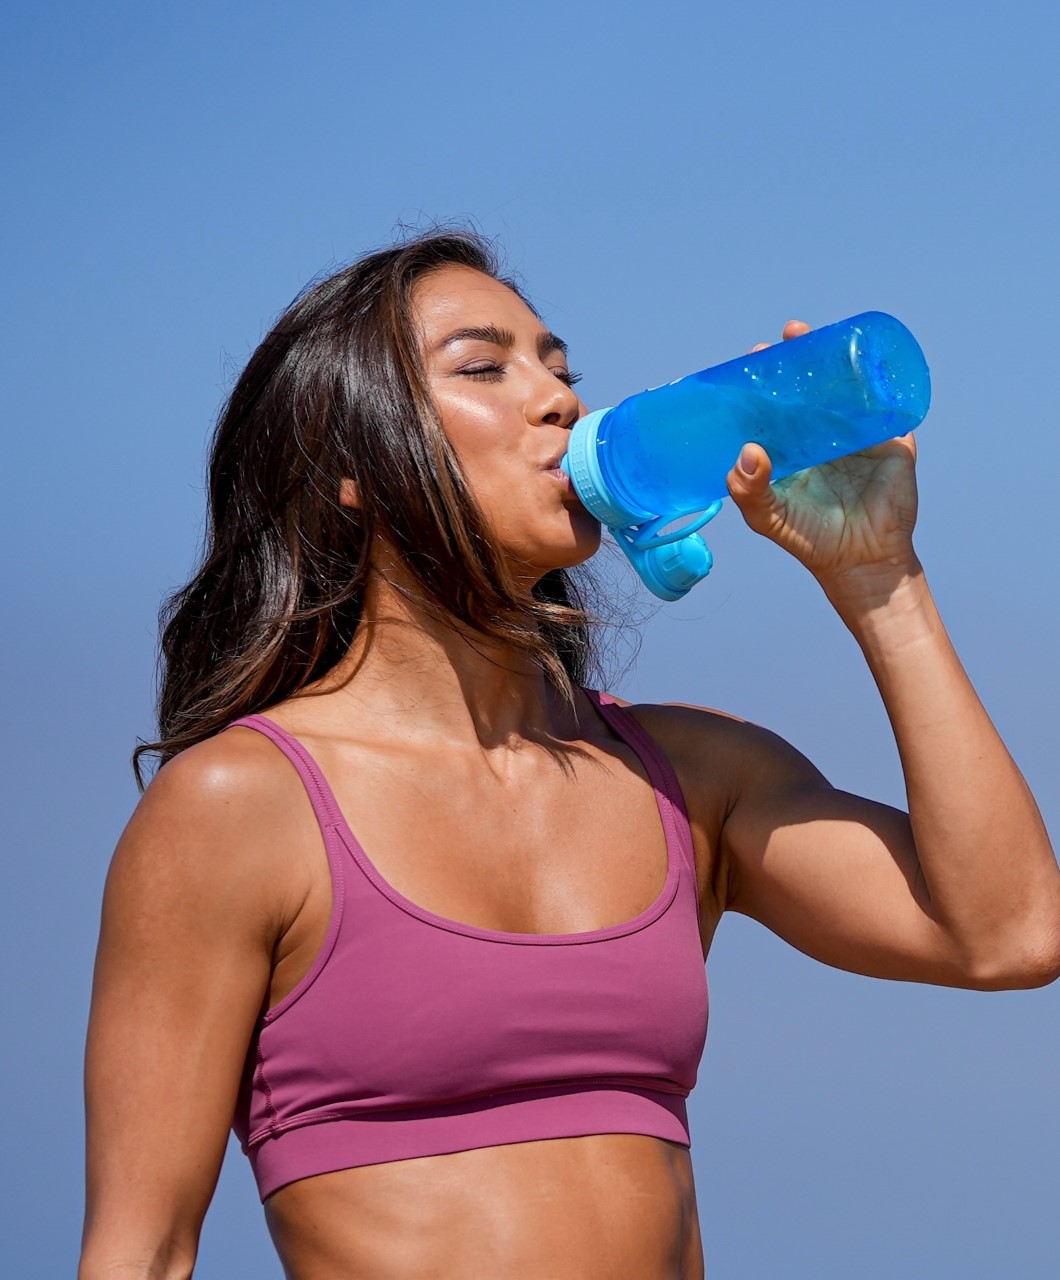 Tritan Motivational Water Bottle with Straw Lid – Takeya USA